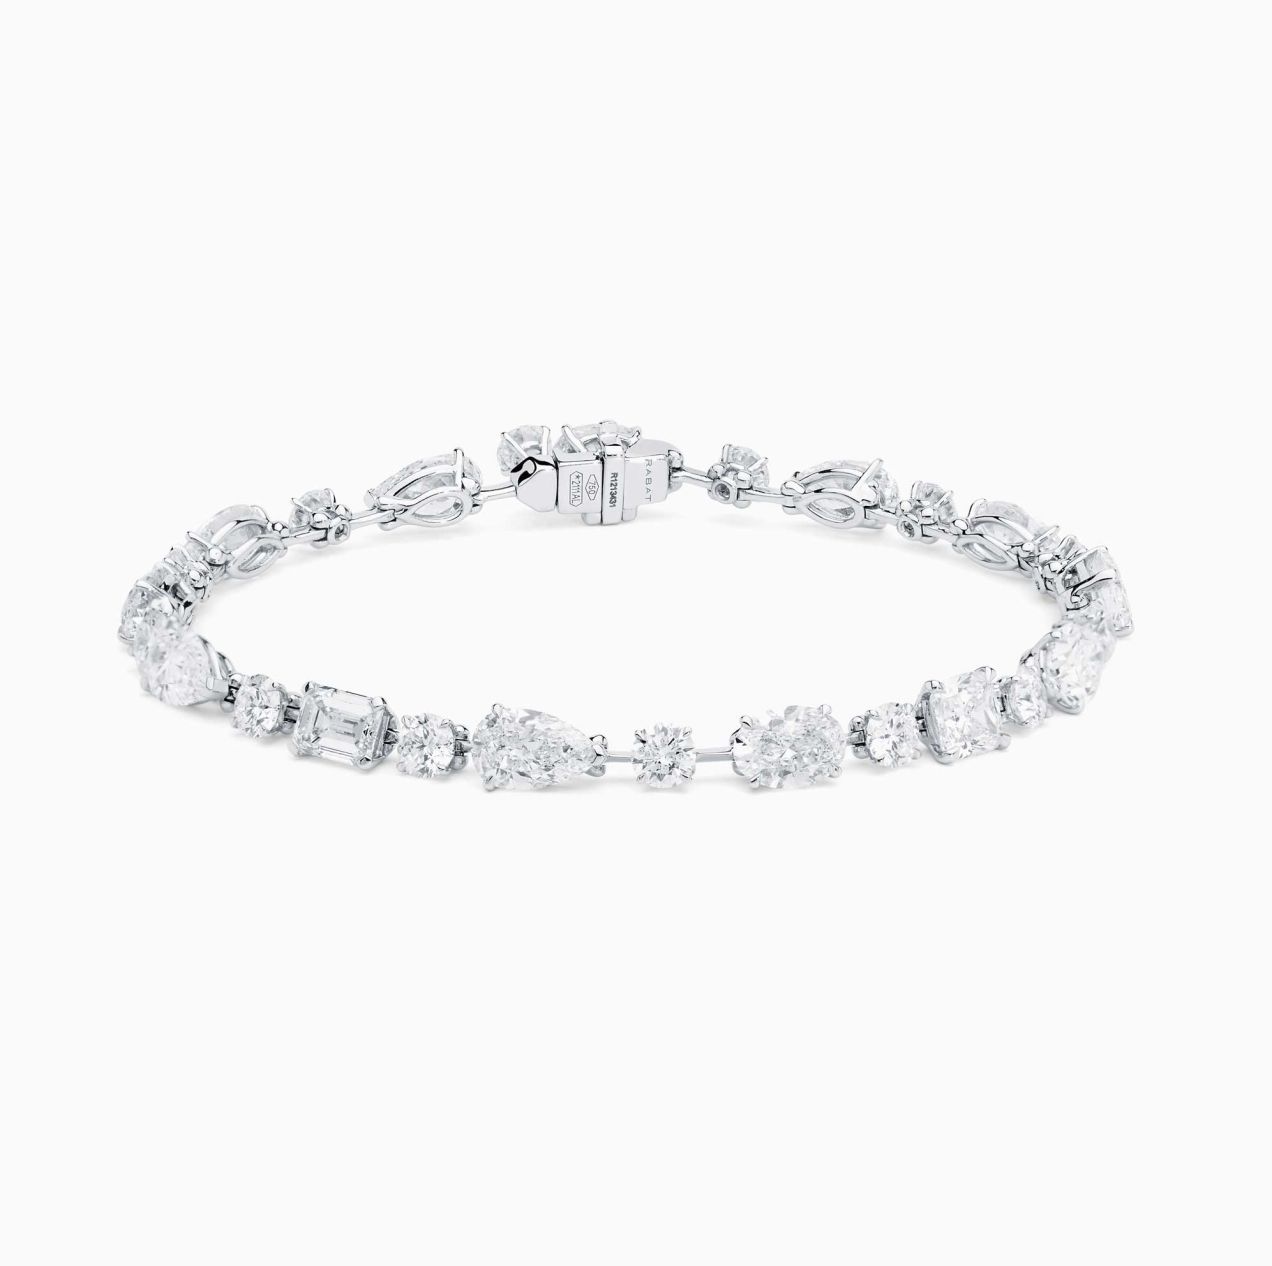 White gold riviere bracelet with multiform diamonds